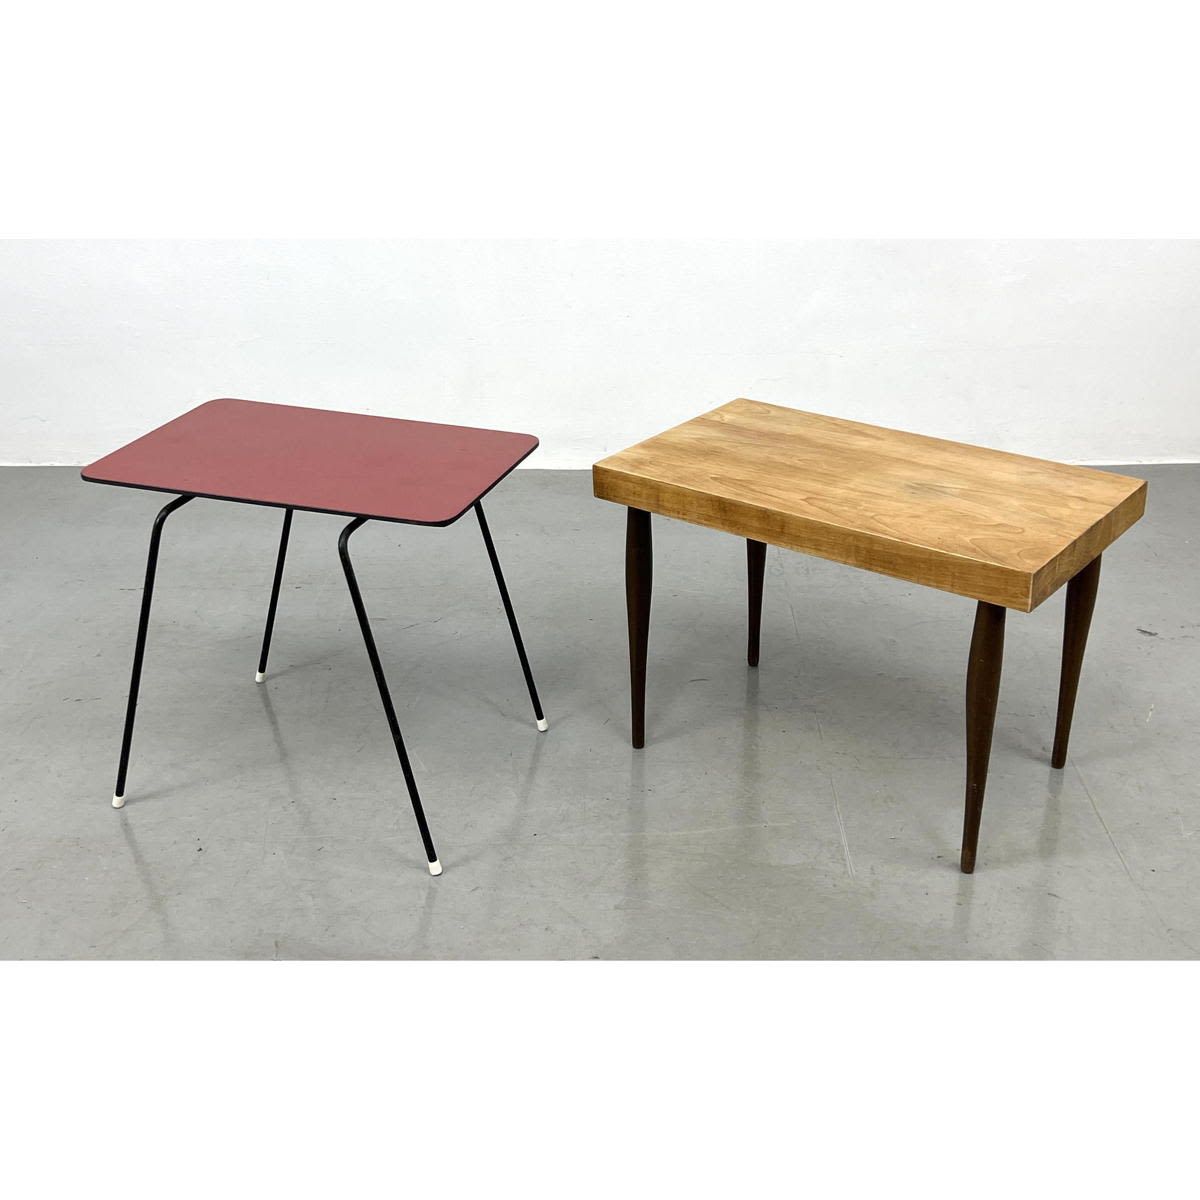 2pc Modernist Side Table Lot. Wood